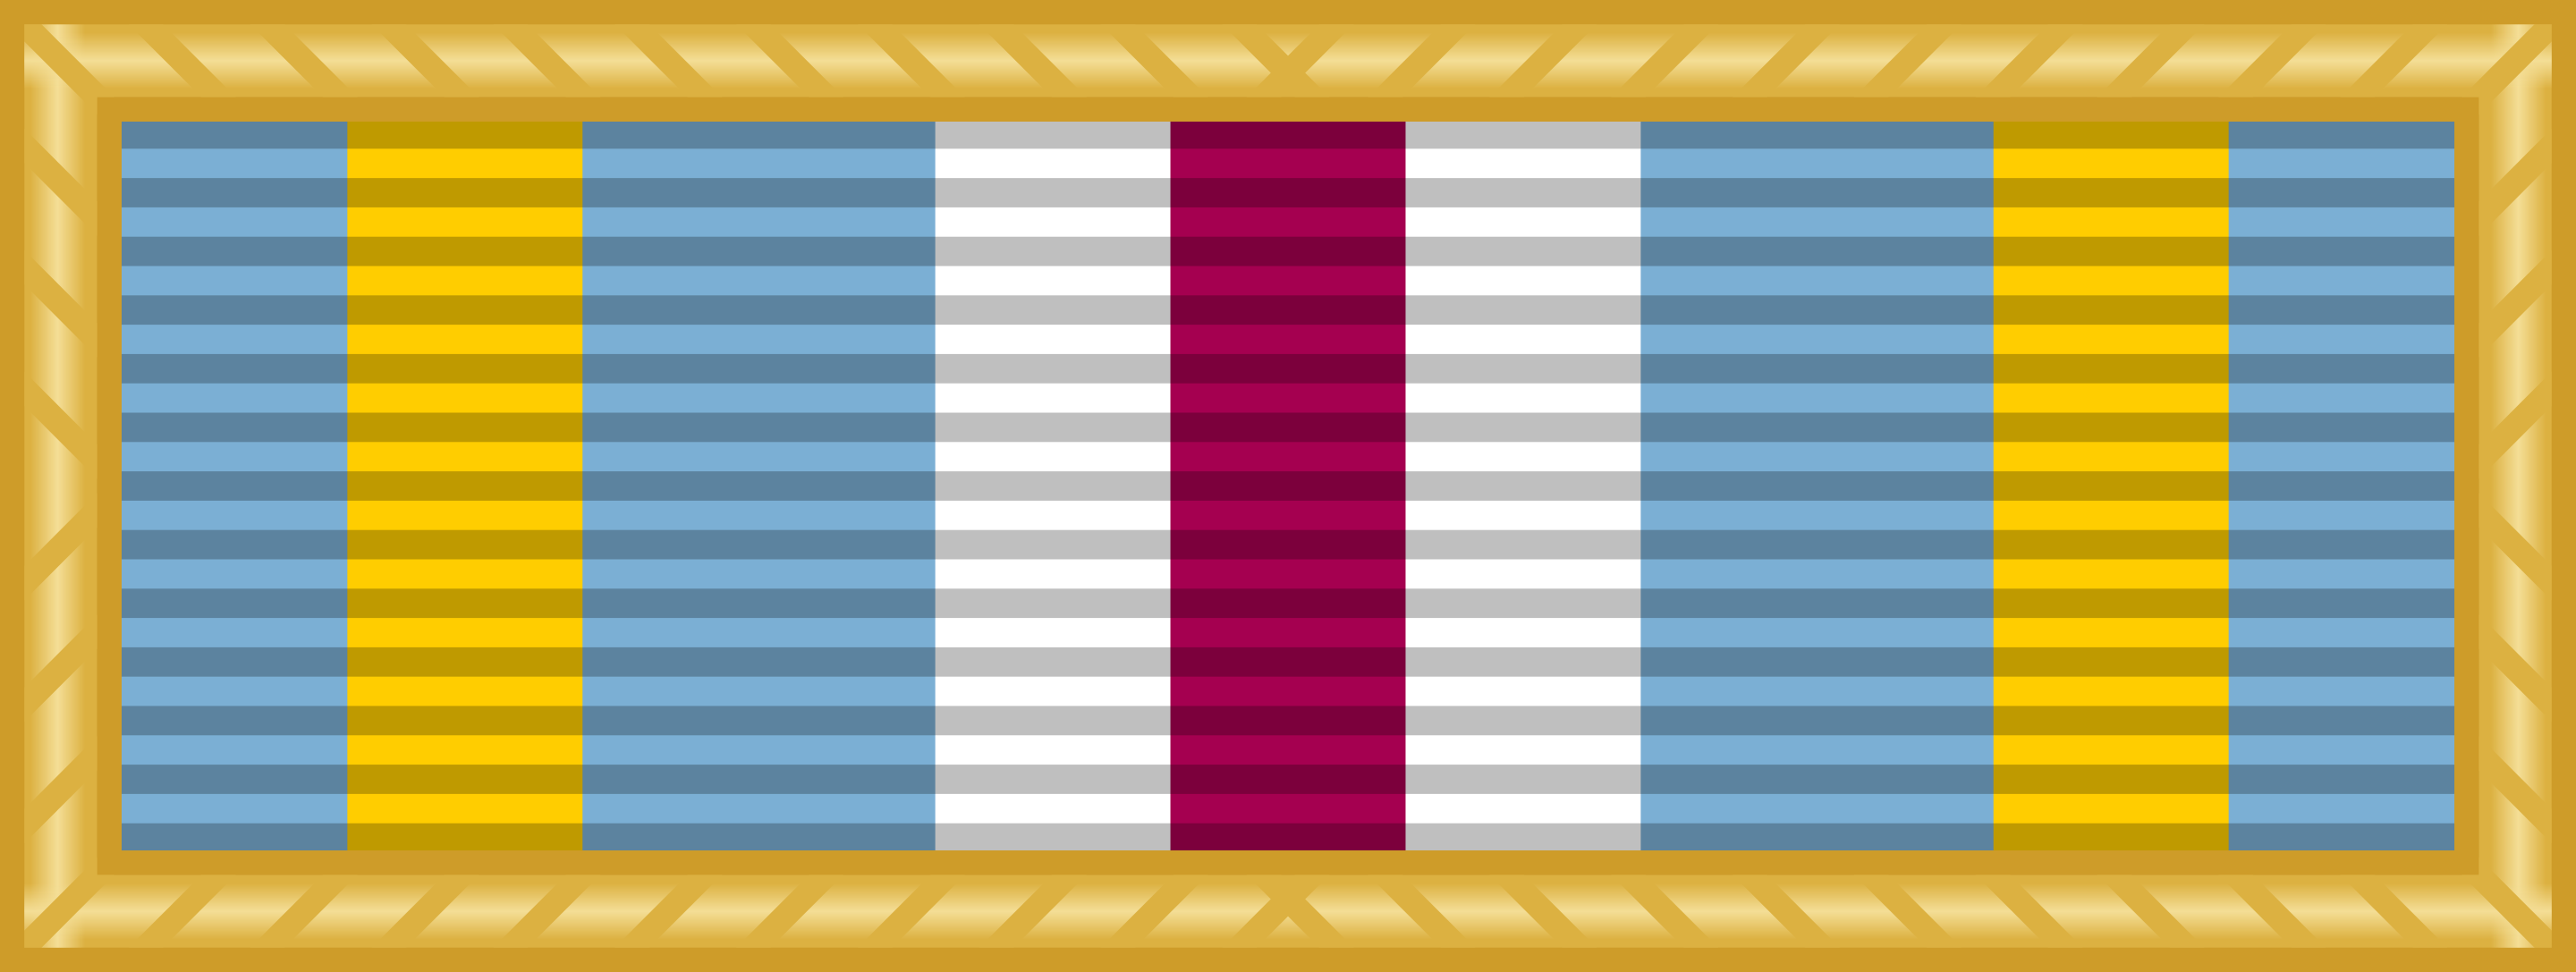 Joint Meritorious Unit Award